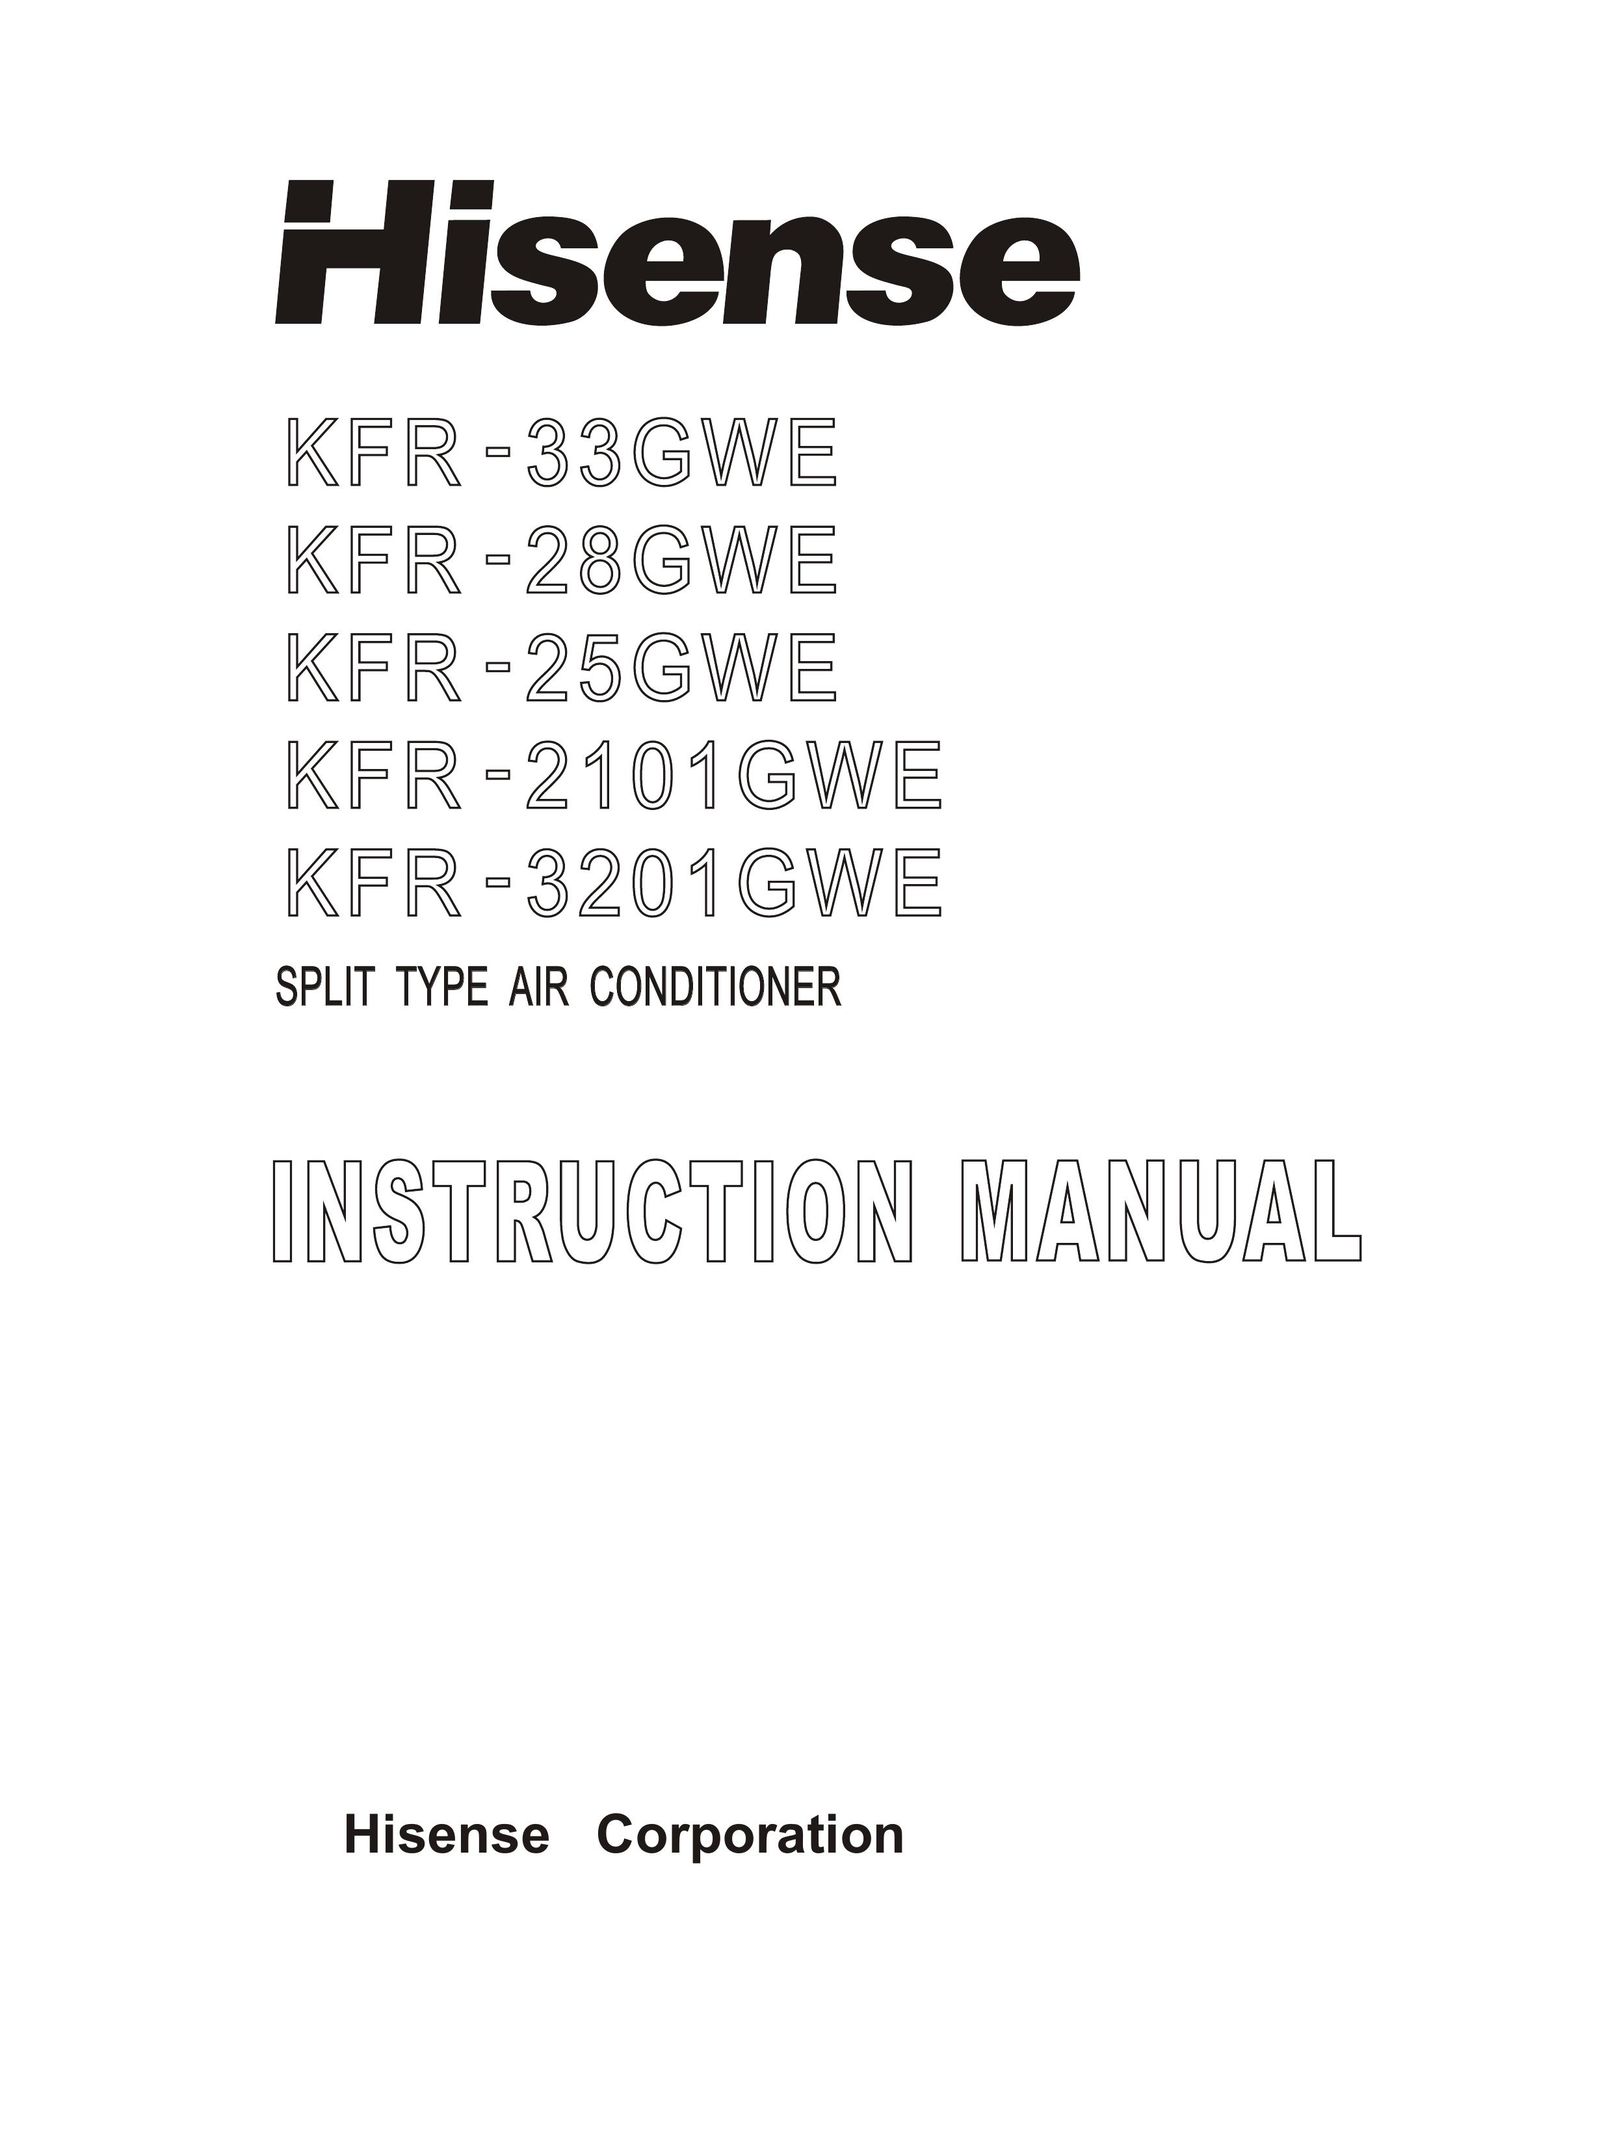 Hisense Group KFR 33GWE Air Conditioner User Manual